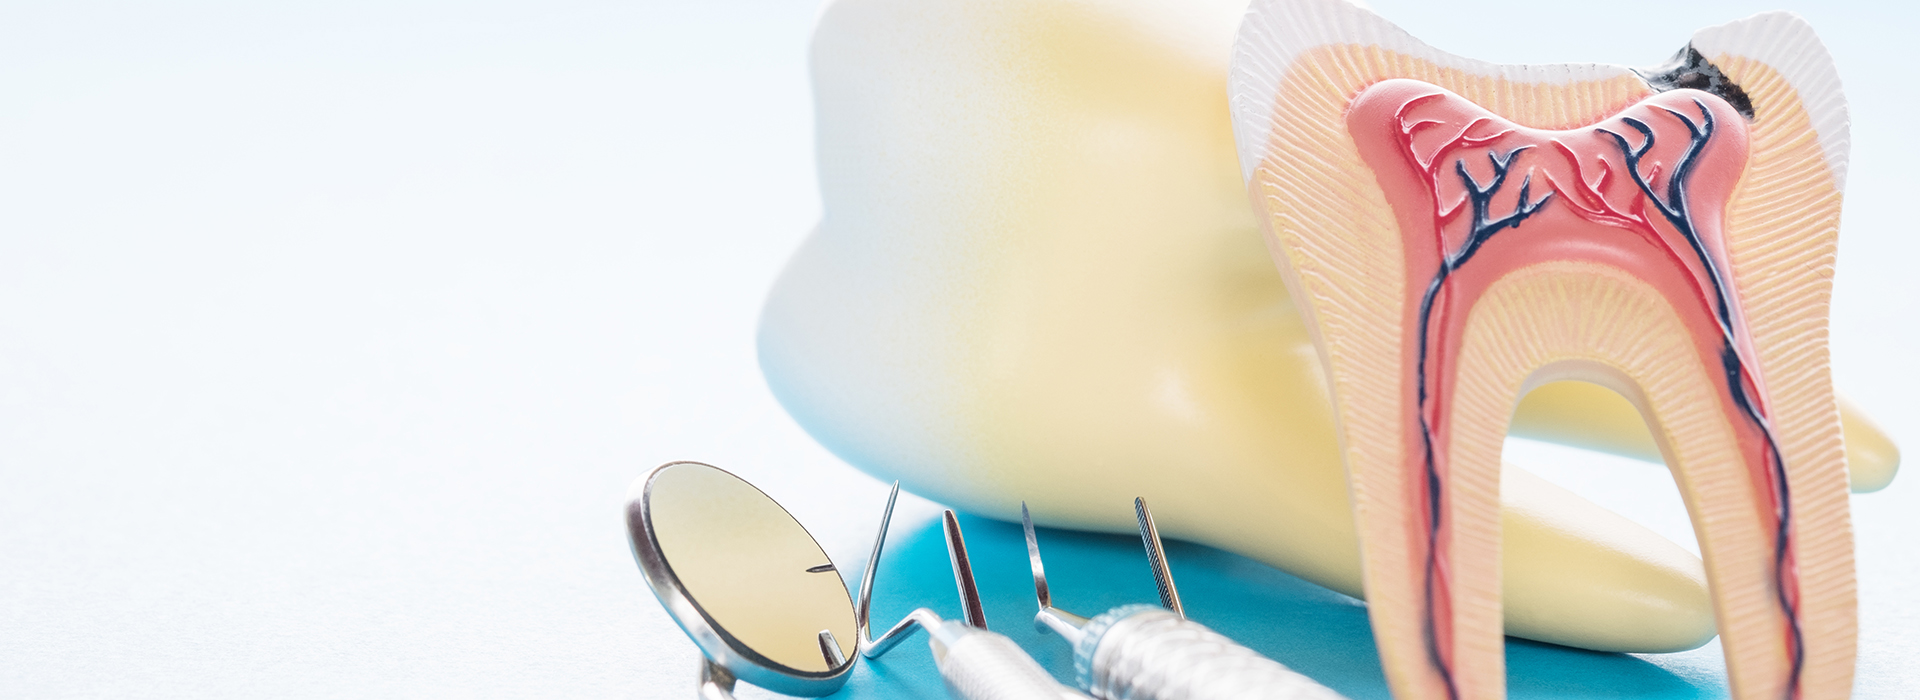 Rosenthal Dental Group | Ceramic Crowns, Cosmetic Dentistry and Sleep Apnea